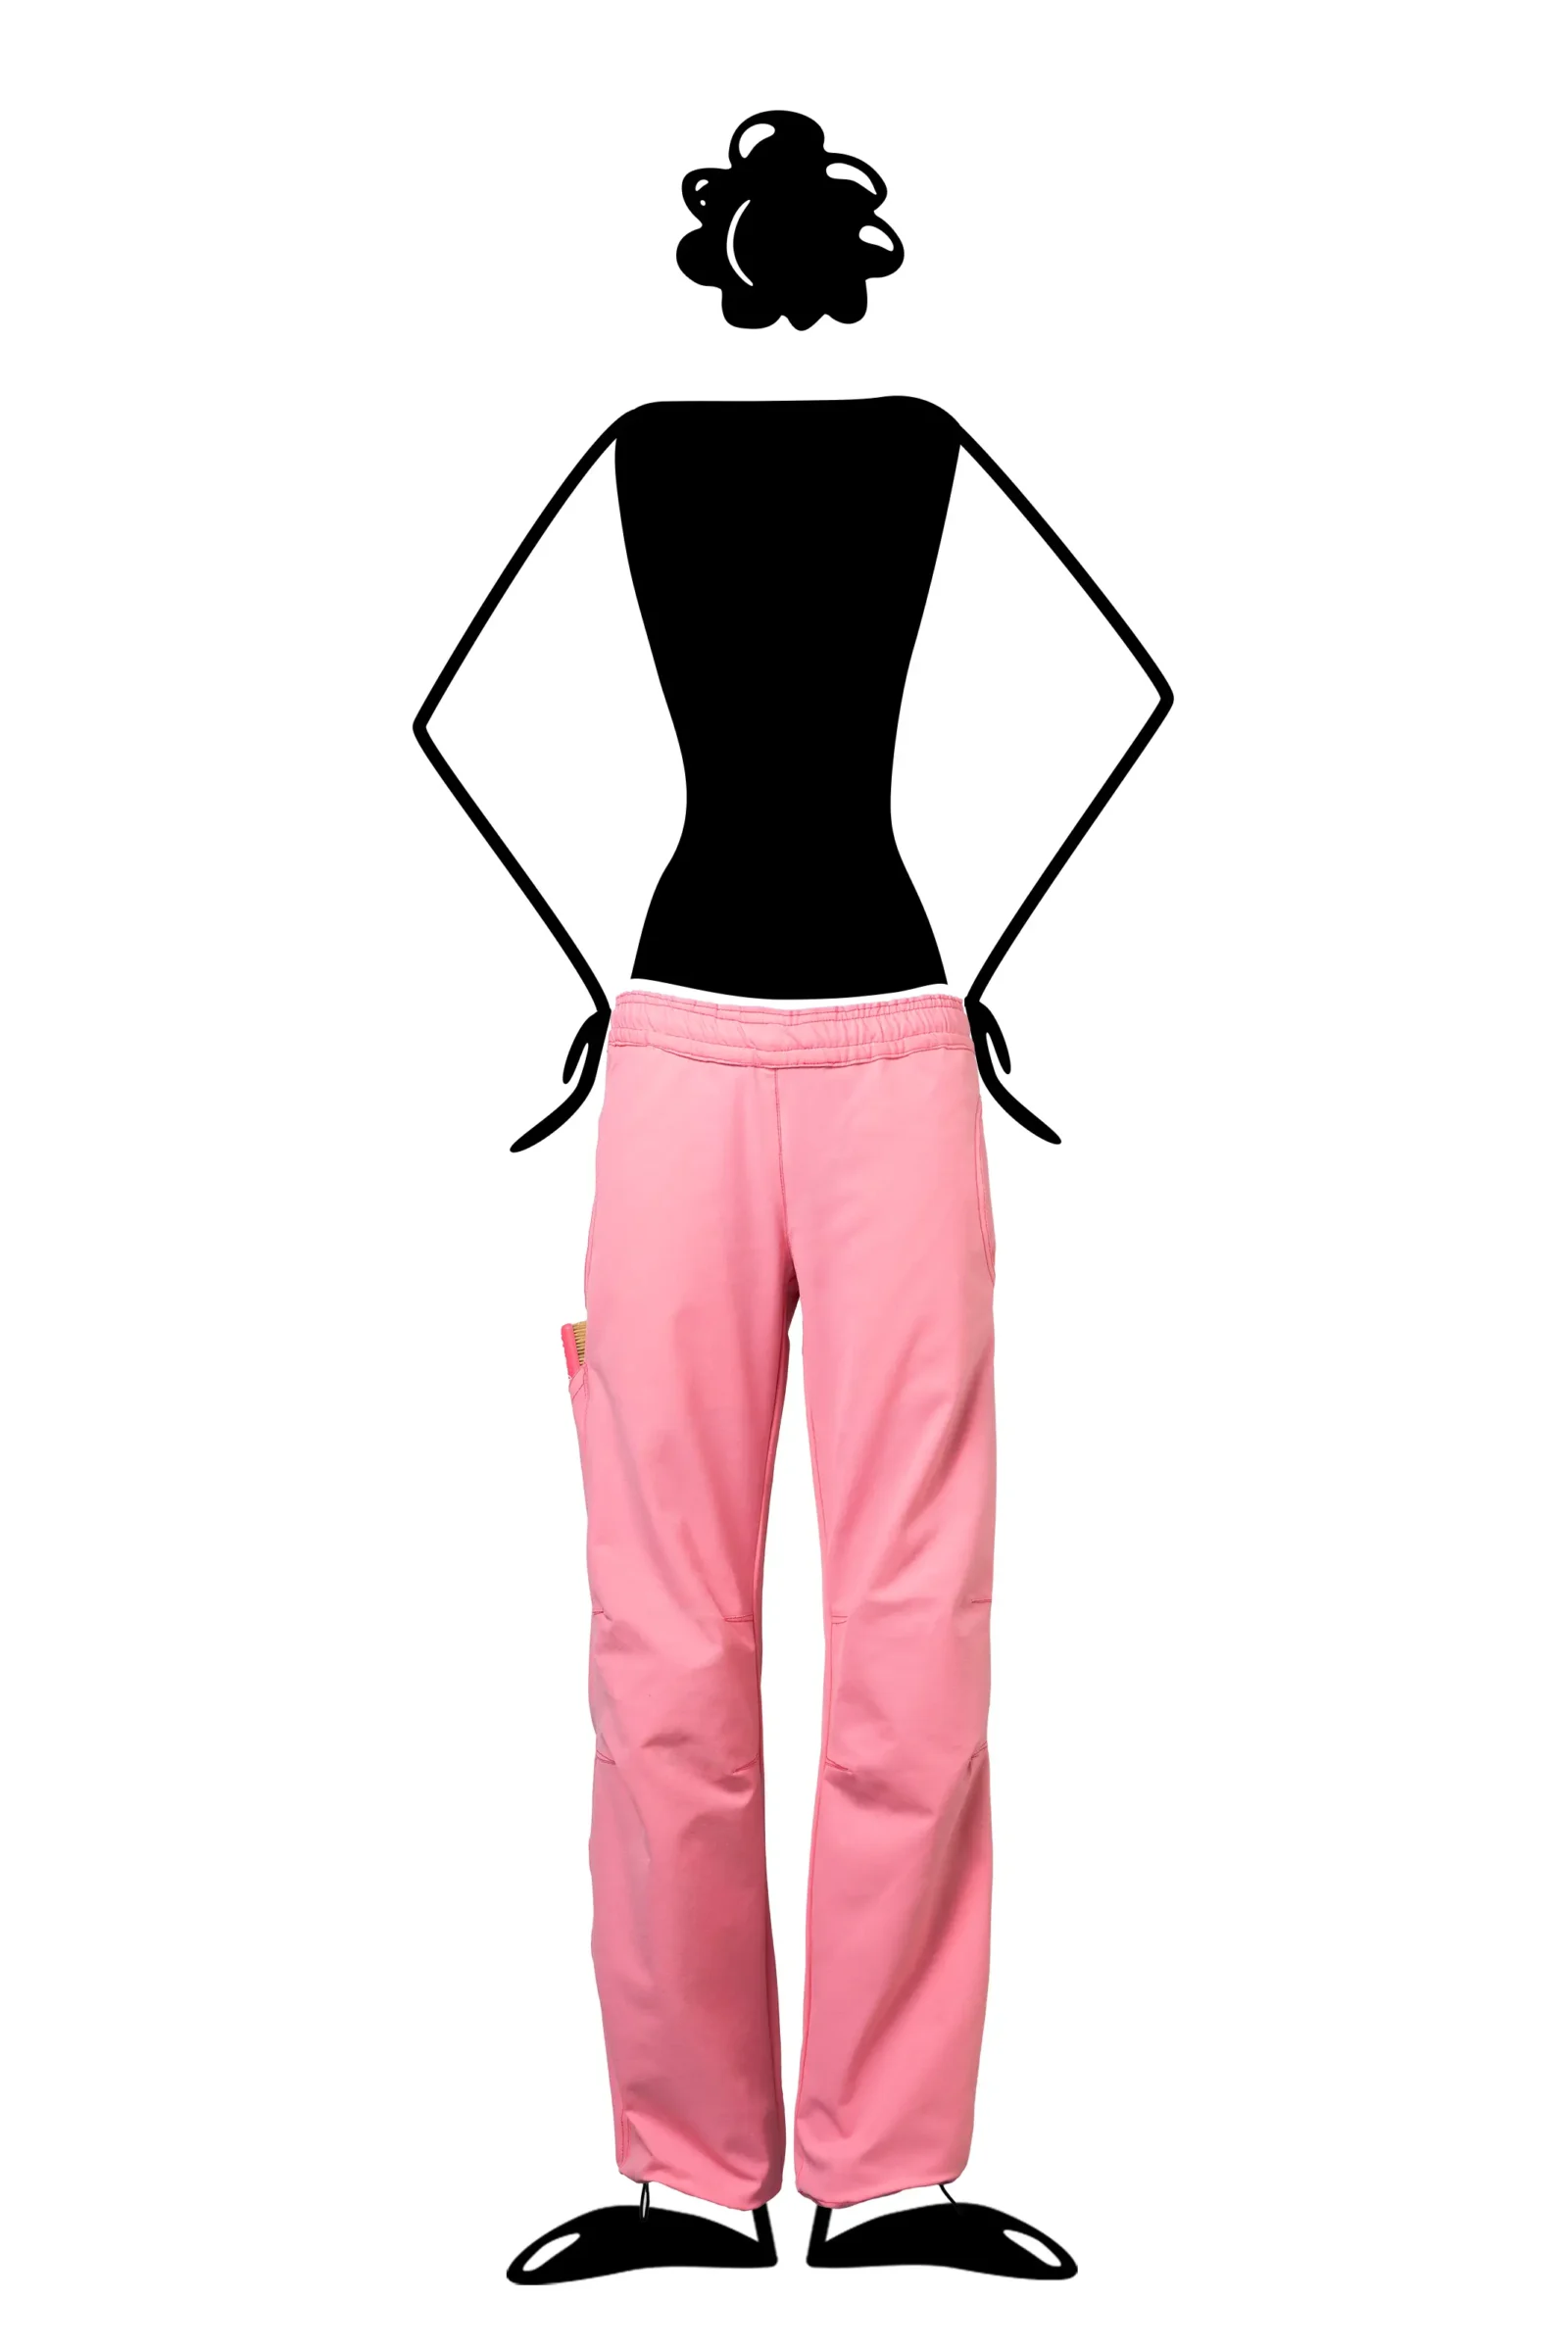 women's sport climbing pants - fluo pink - stretch cotton - VIOLET MONVIC